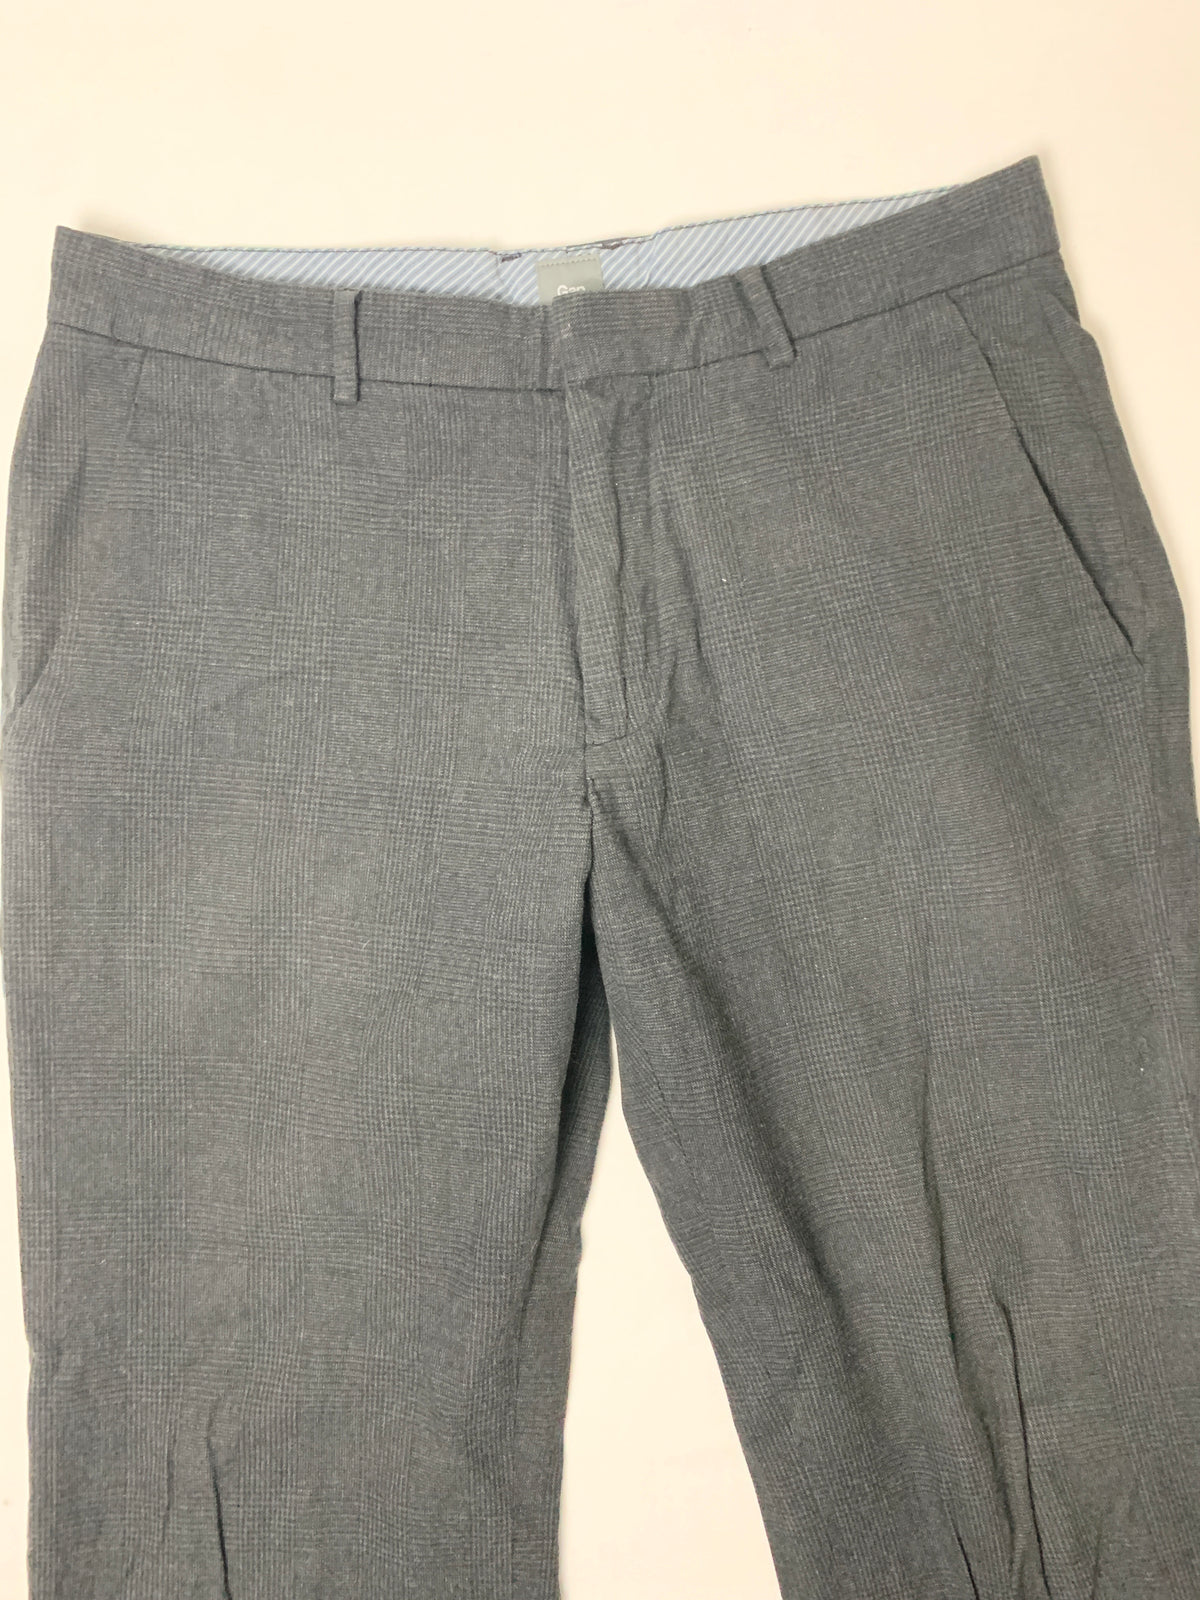 Gap Mens dress pants size 31/30 — Family Tree Resale 1